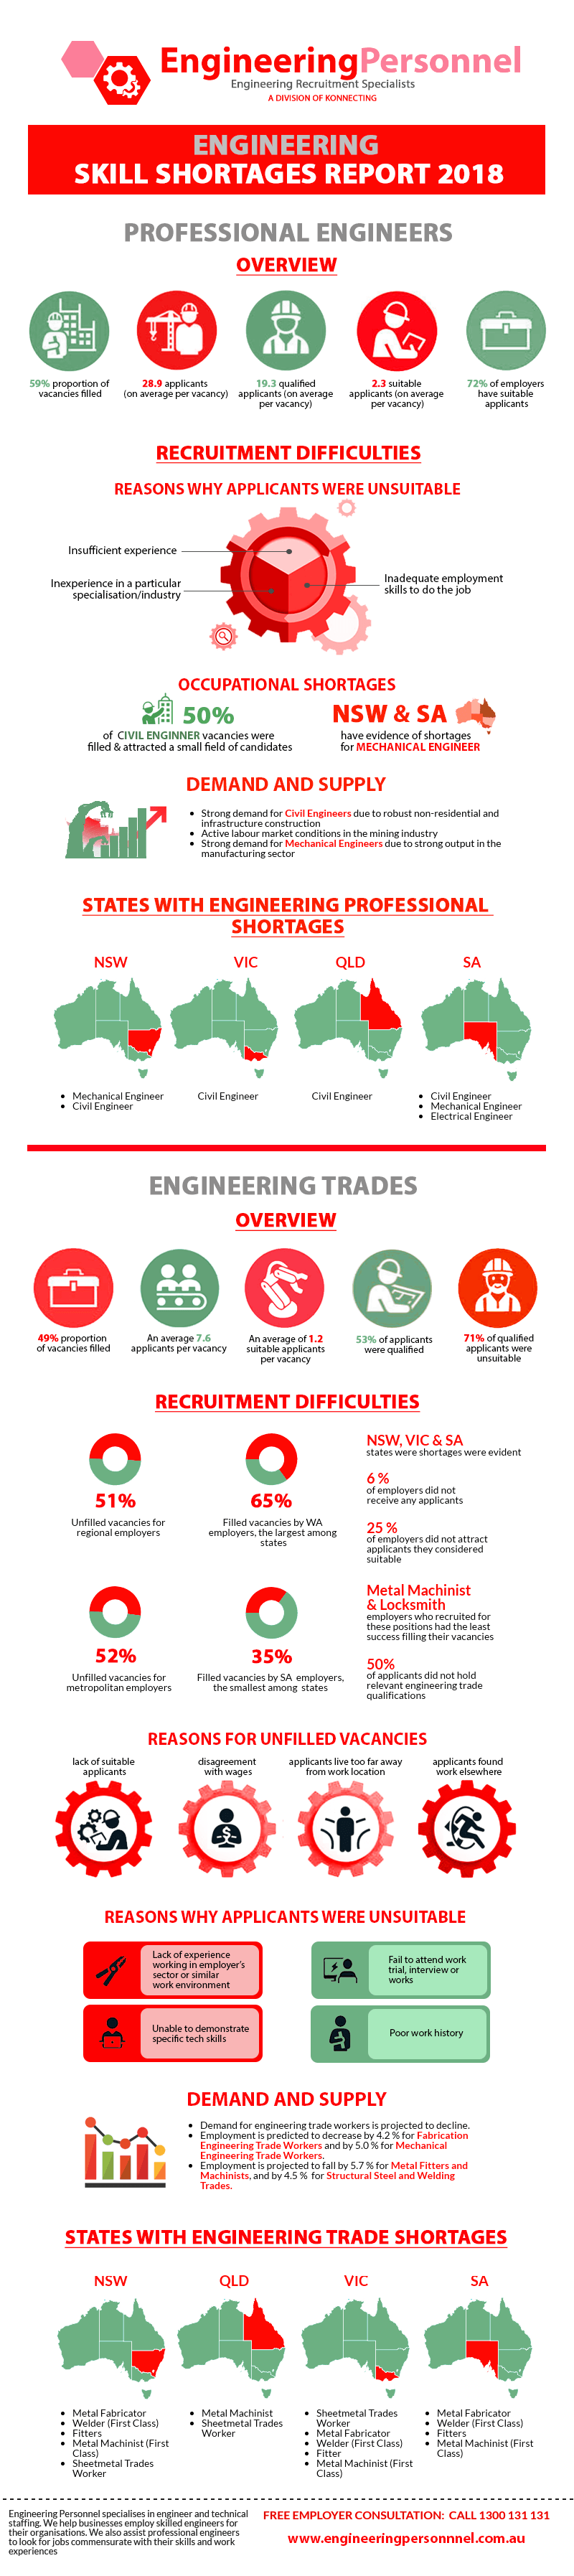 engineering-skill-shortage-2018